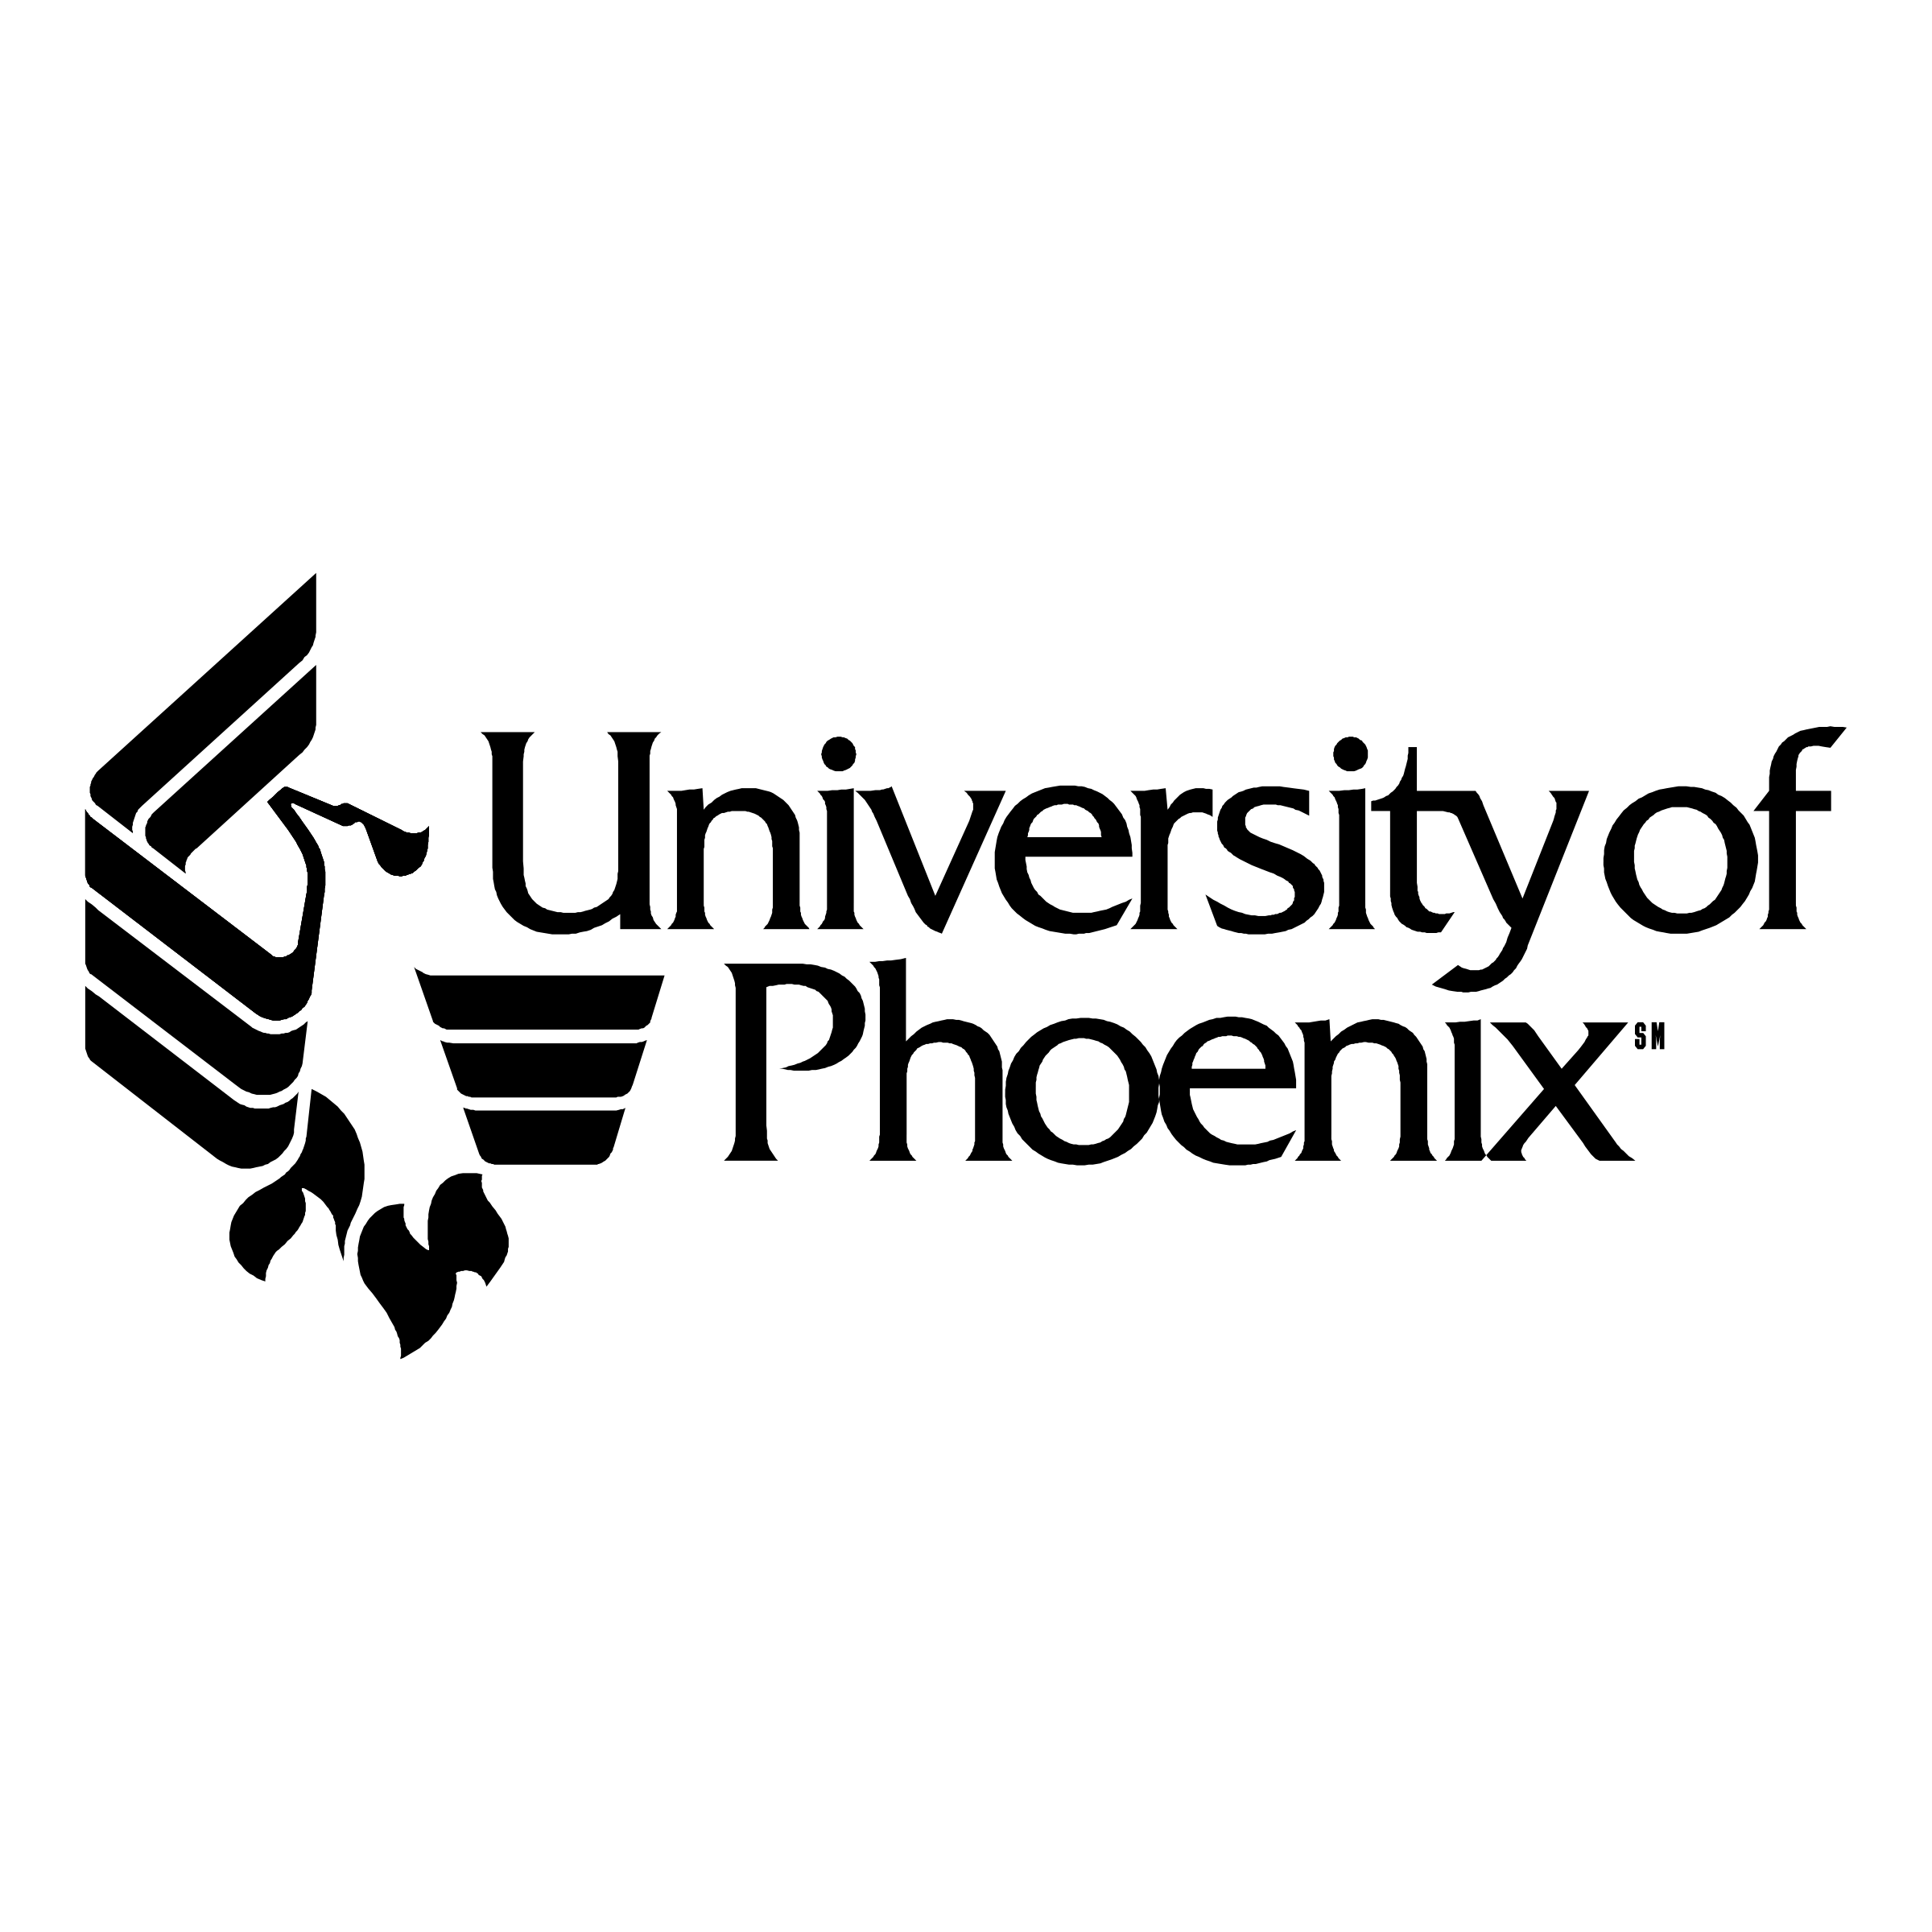 university-of-phoenix-1-logo-black-and-white